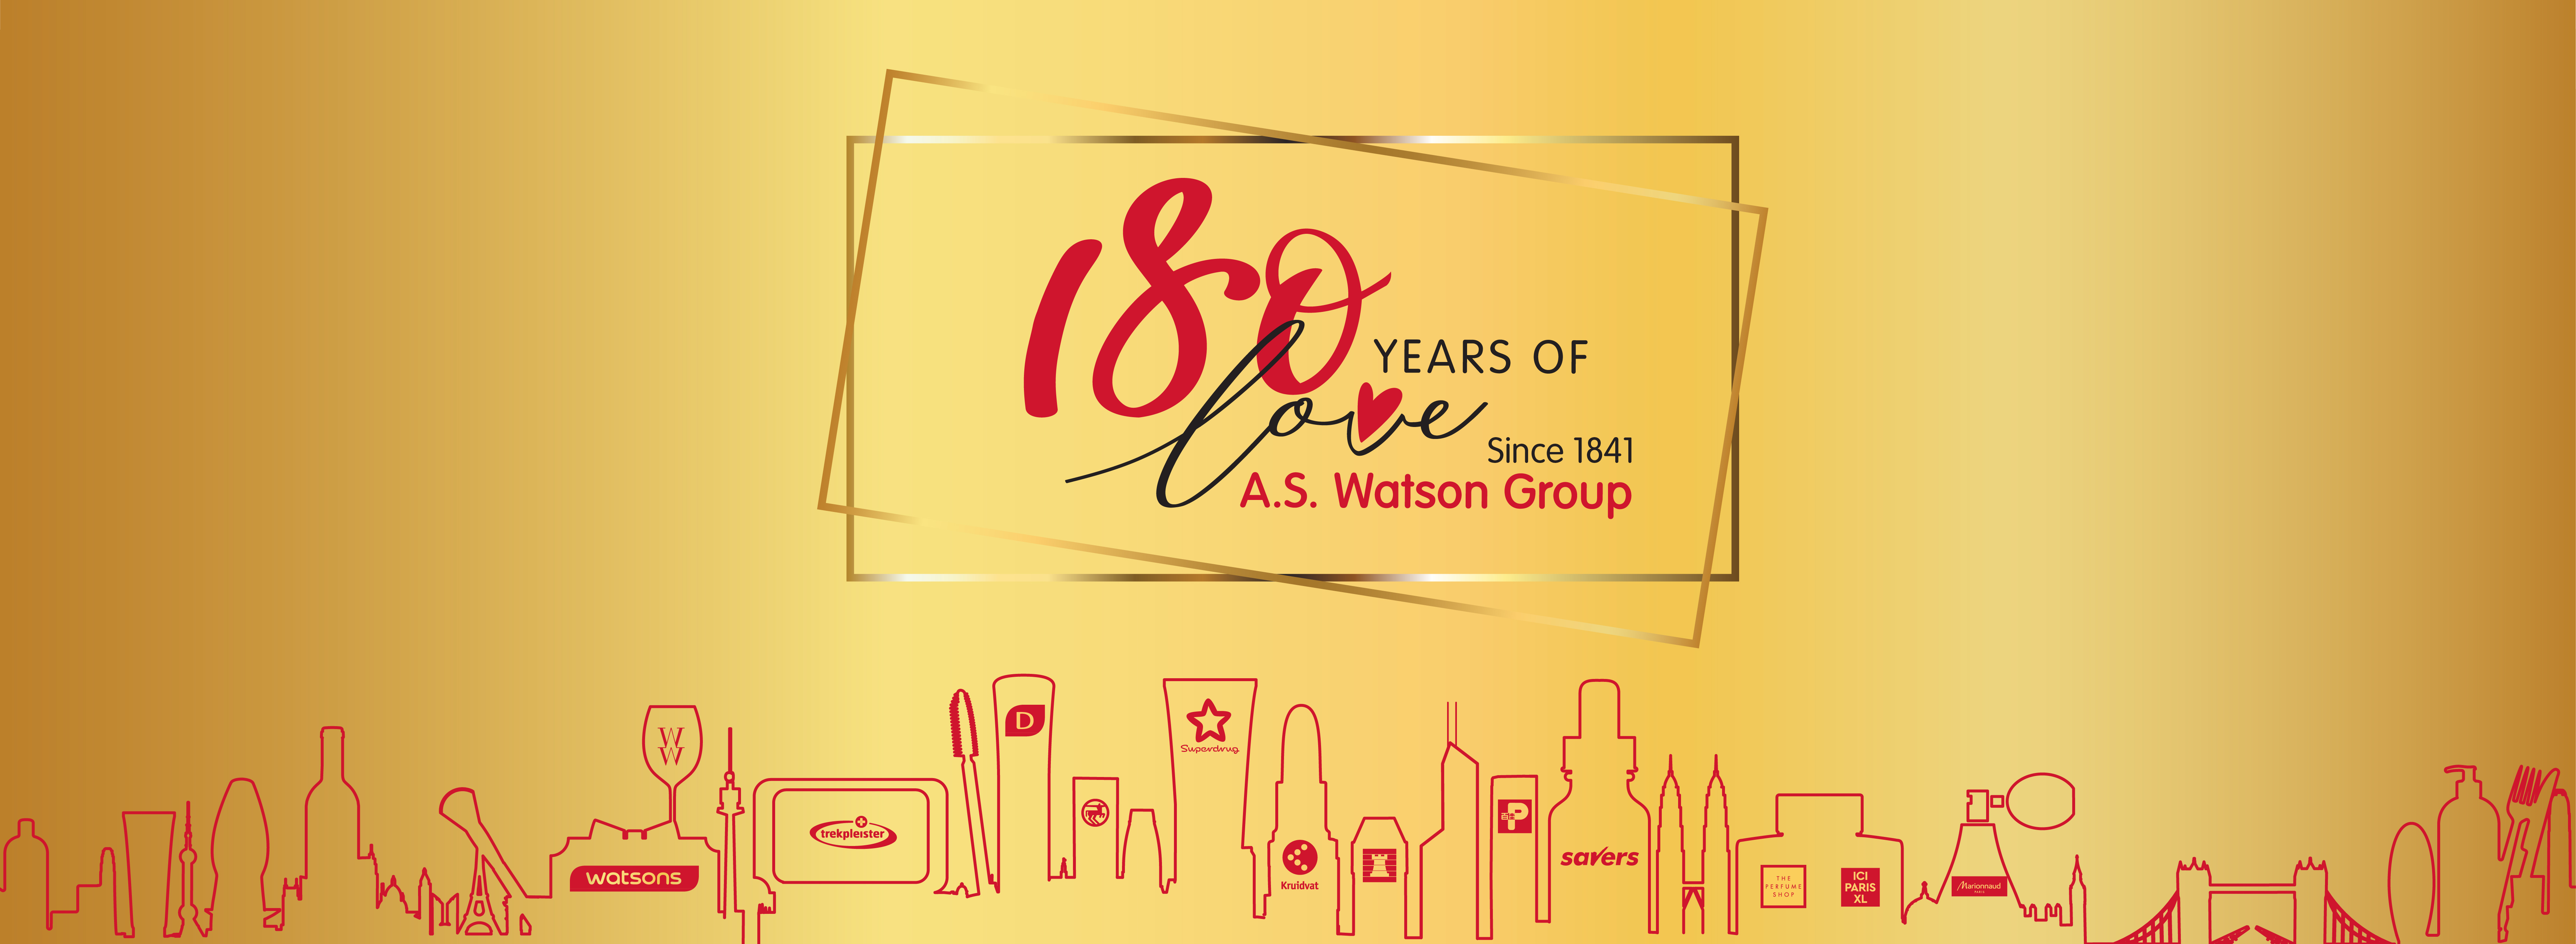 ASW 180th Anniversary Celebration & MAKE 2021 Theme